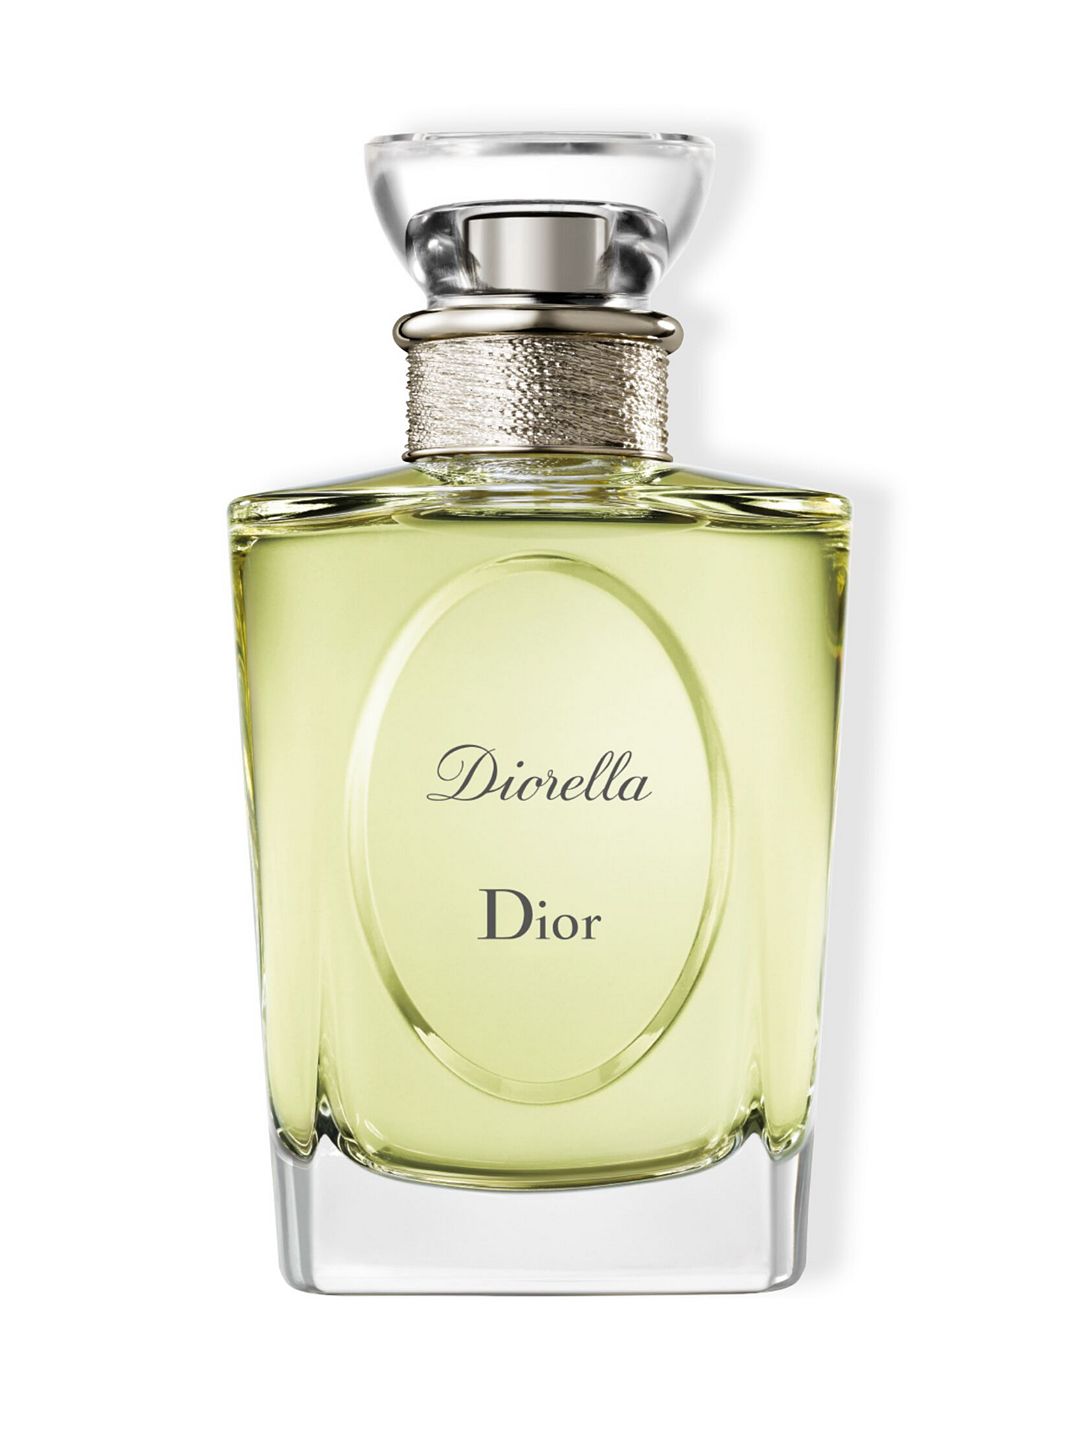 Dior Diorella Eau De Toilette Spray, 100ml 1